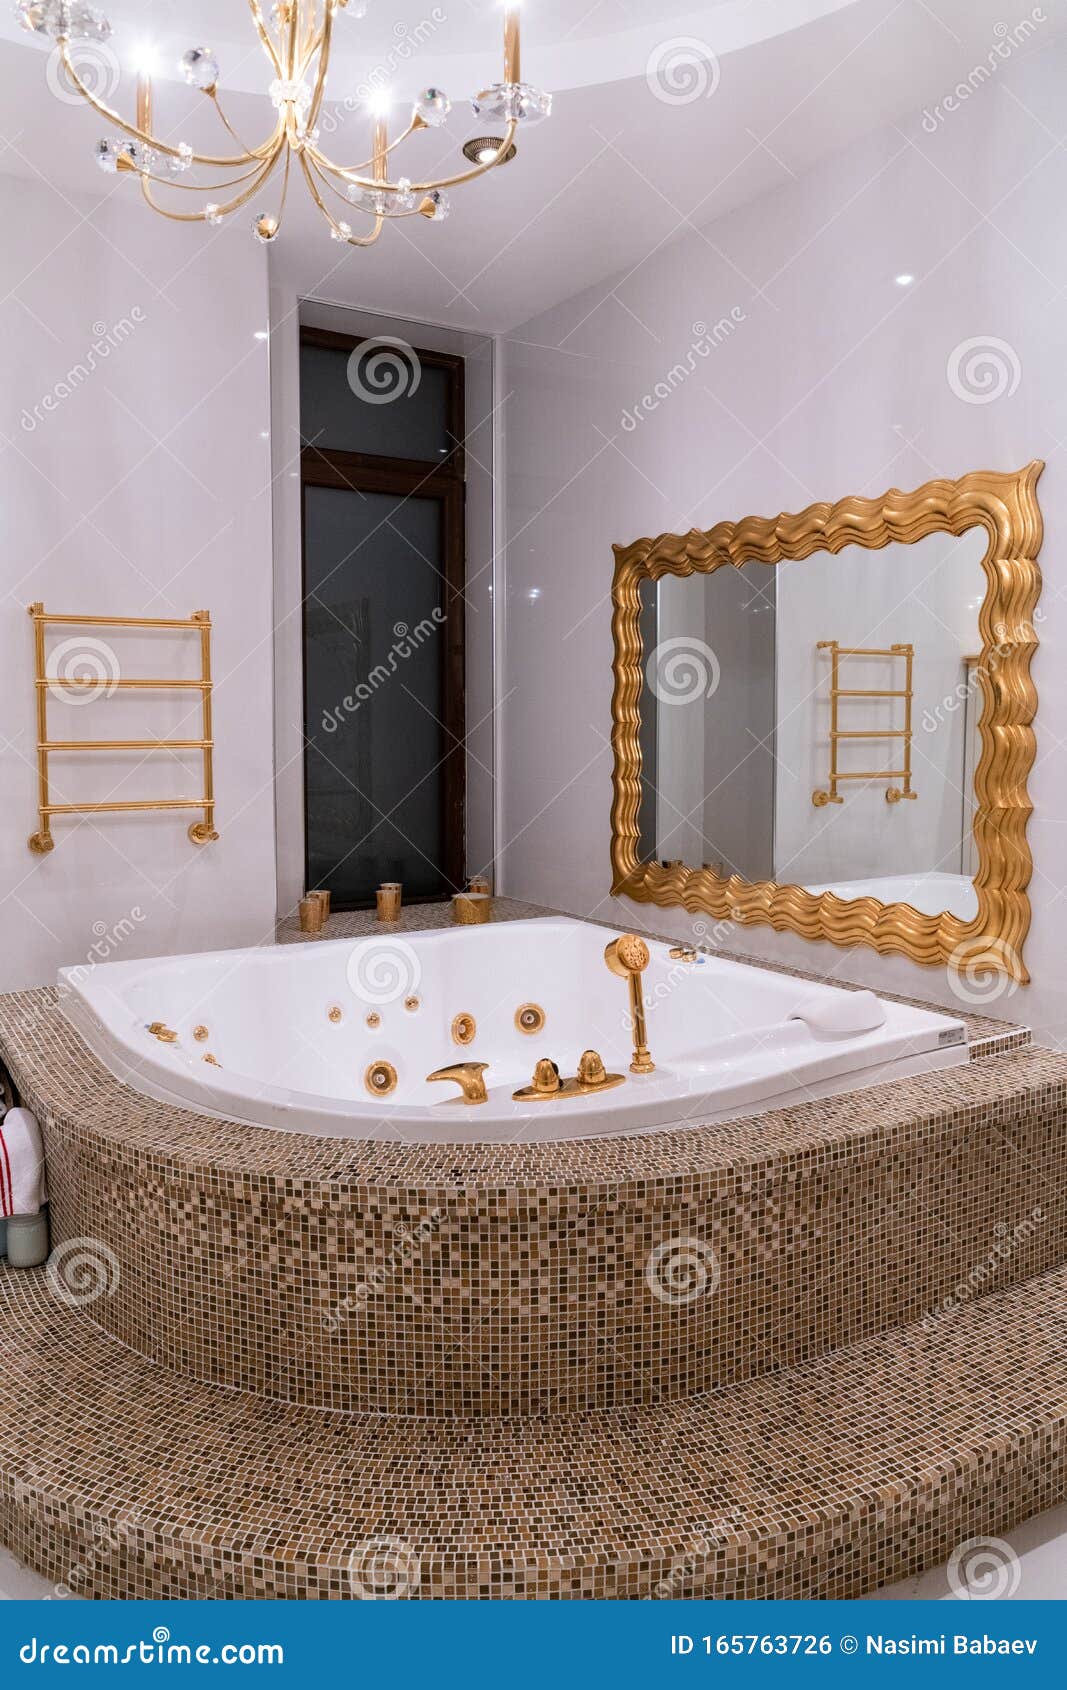 Interior of a Luxury Bathroom with Jacuzzi Stock Photo - Image of cozy,  bath: 165763726